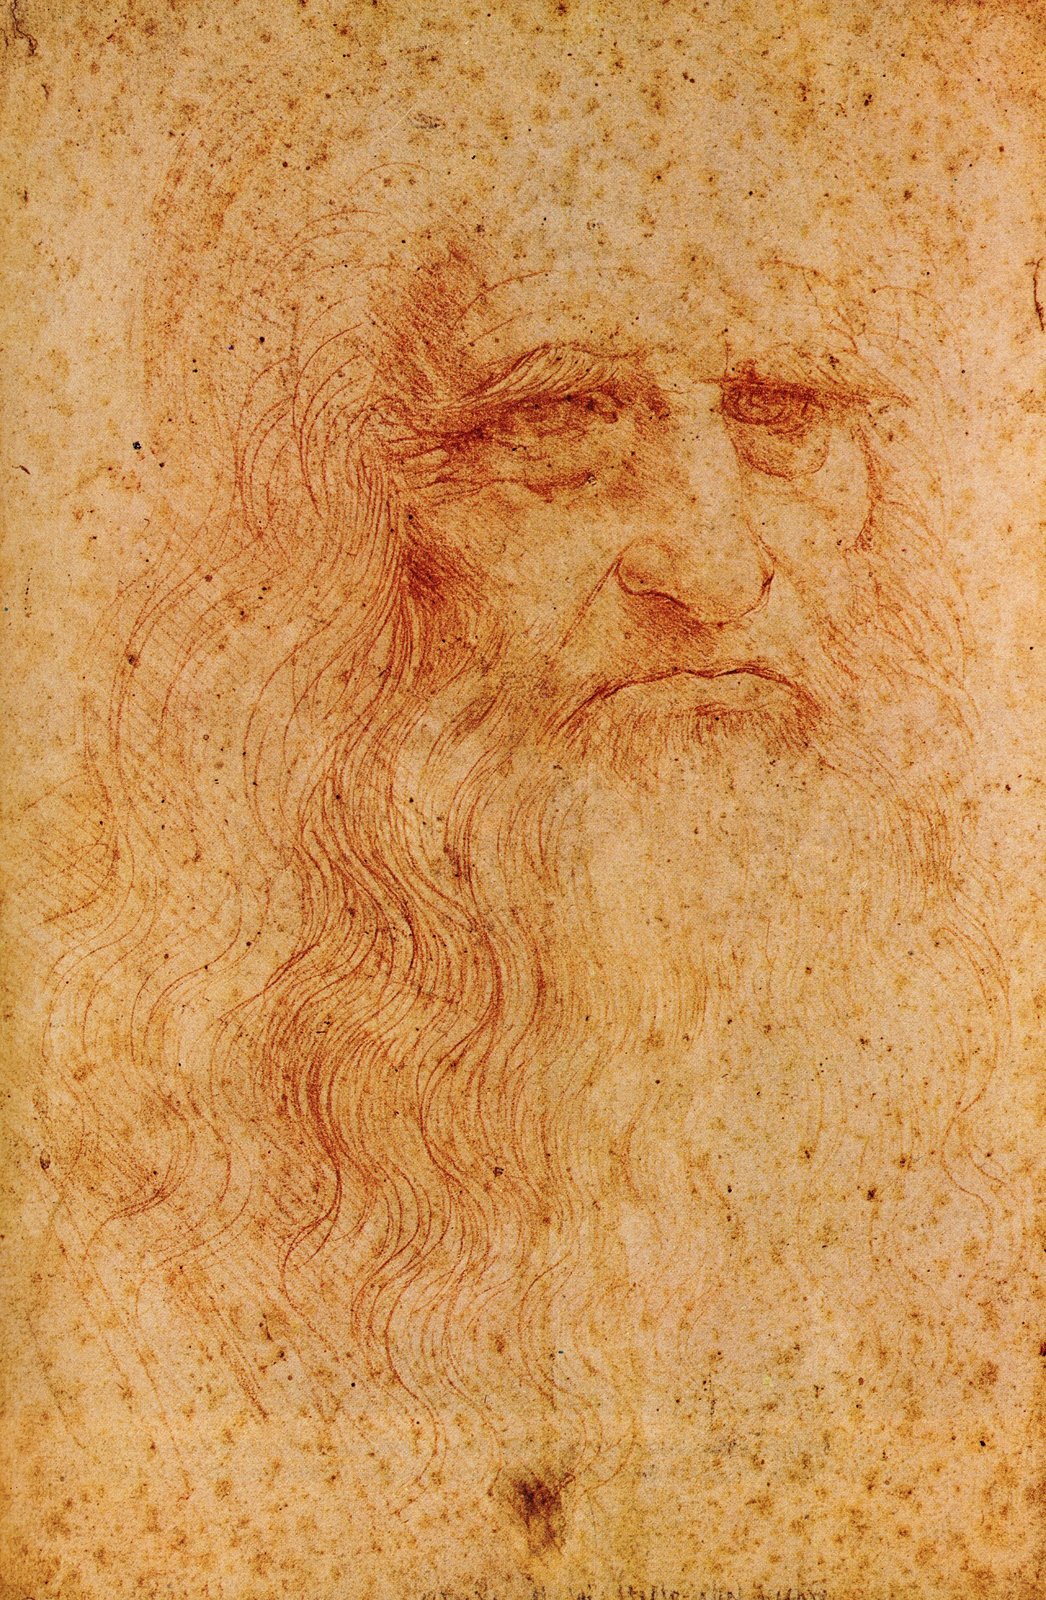 [Leonardo+da+Vinci+A+Man+For+All+Ages+Self+Portrait+National+Geographic+Sep+77+p297.jpg]